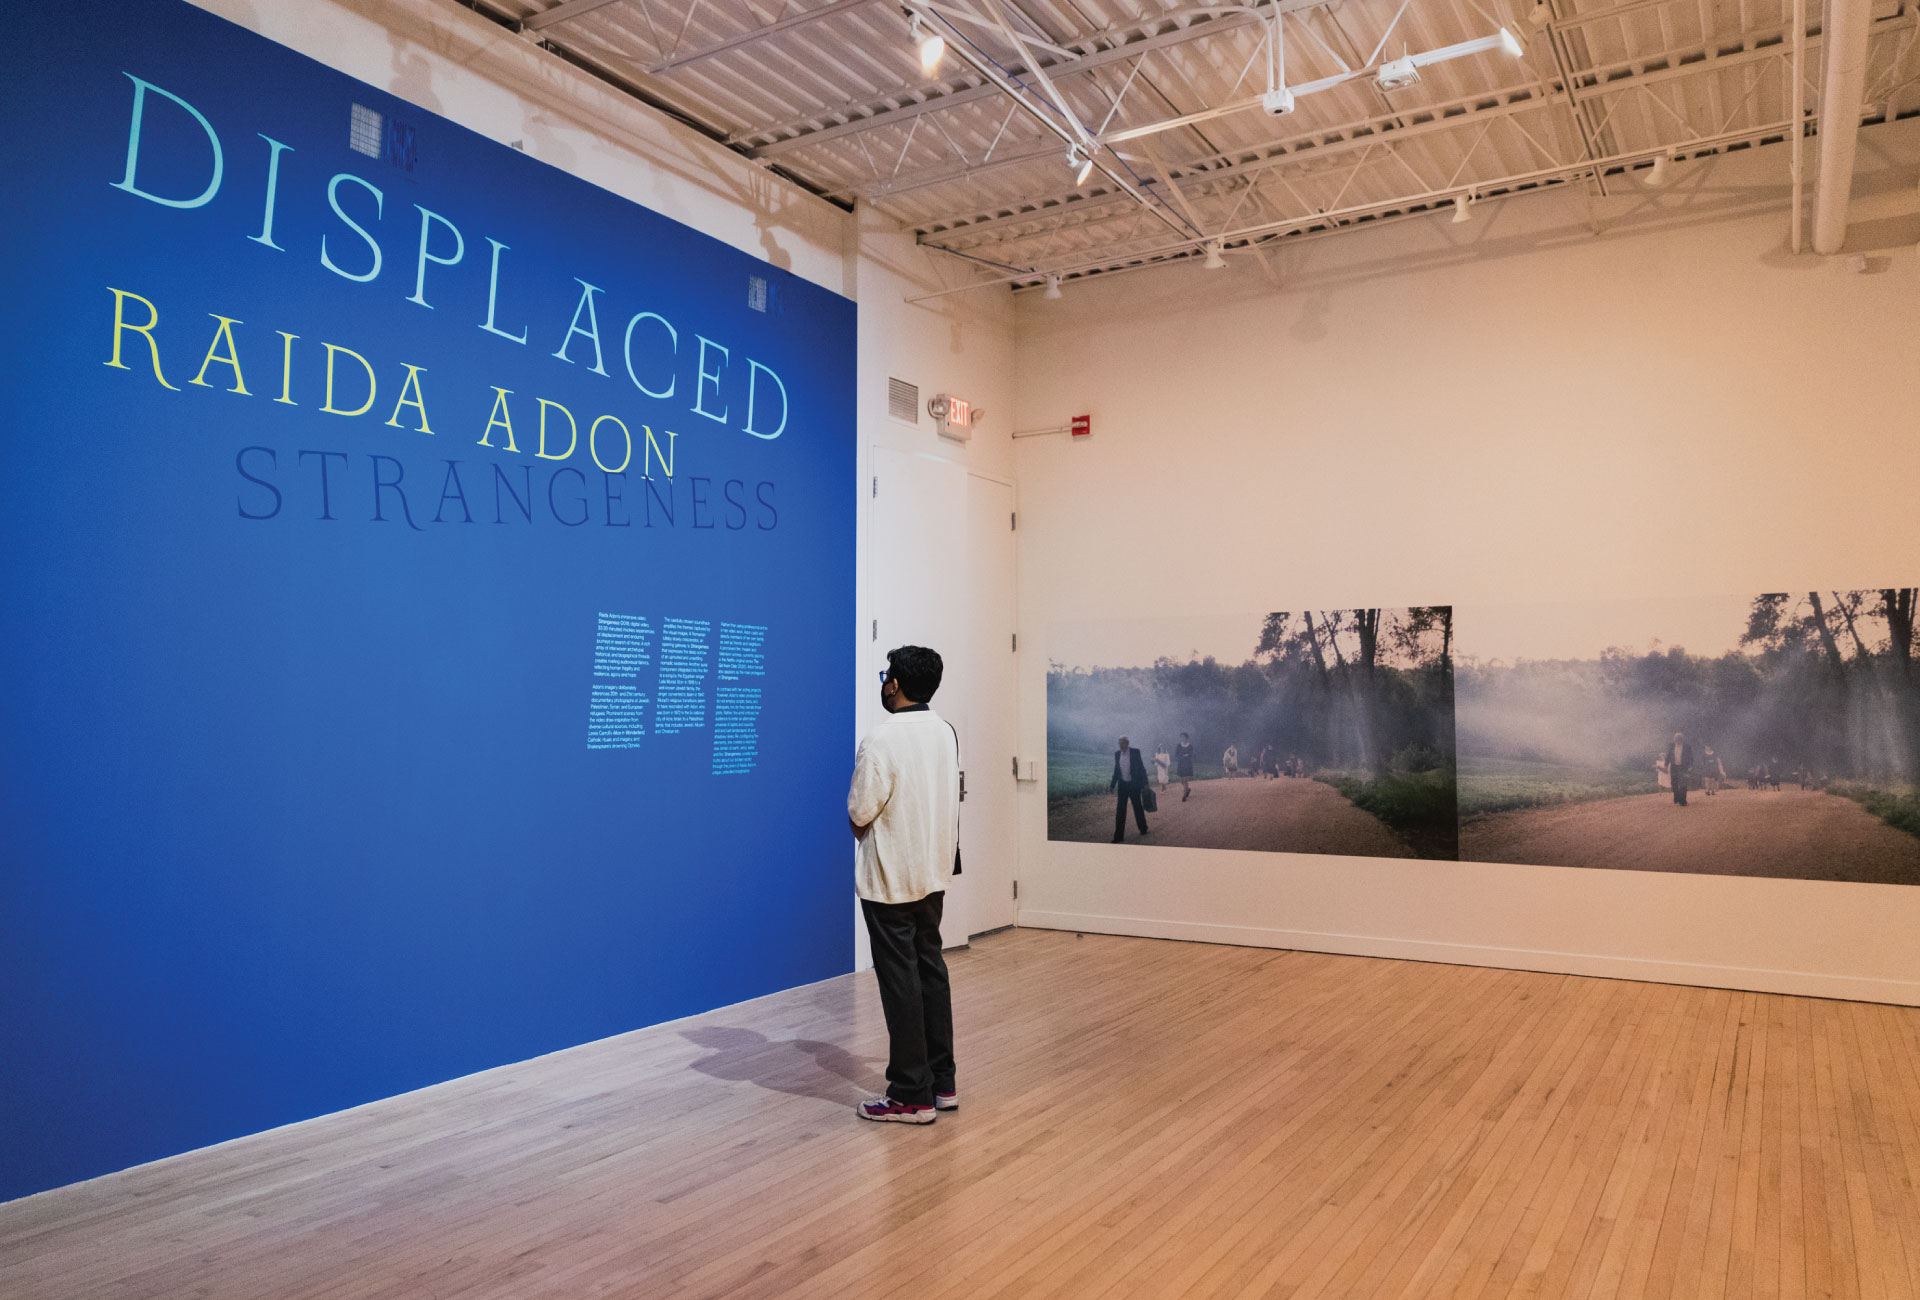 Installation view of "Displaced: Raida Adon's Strangeness"